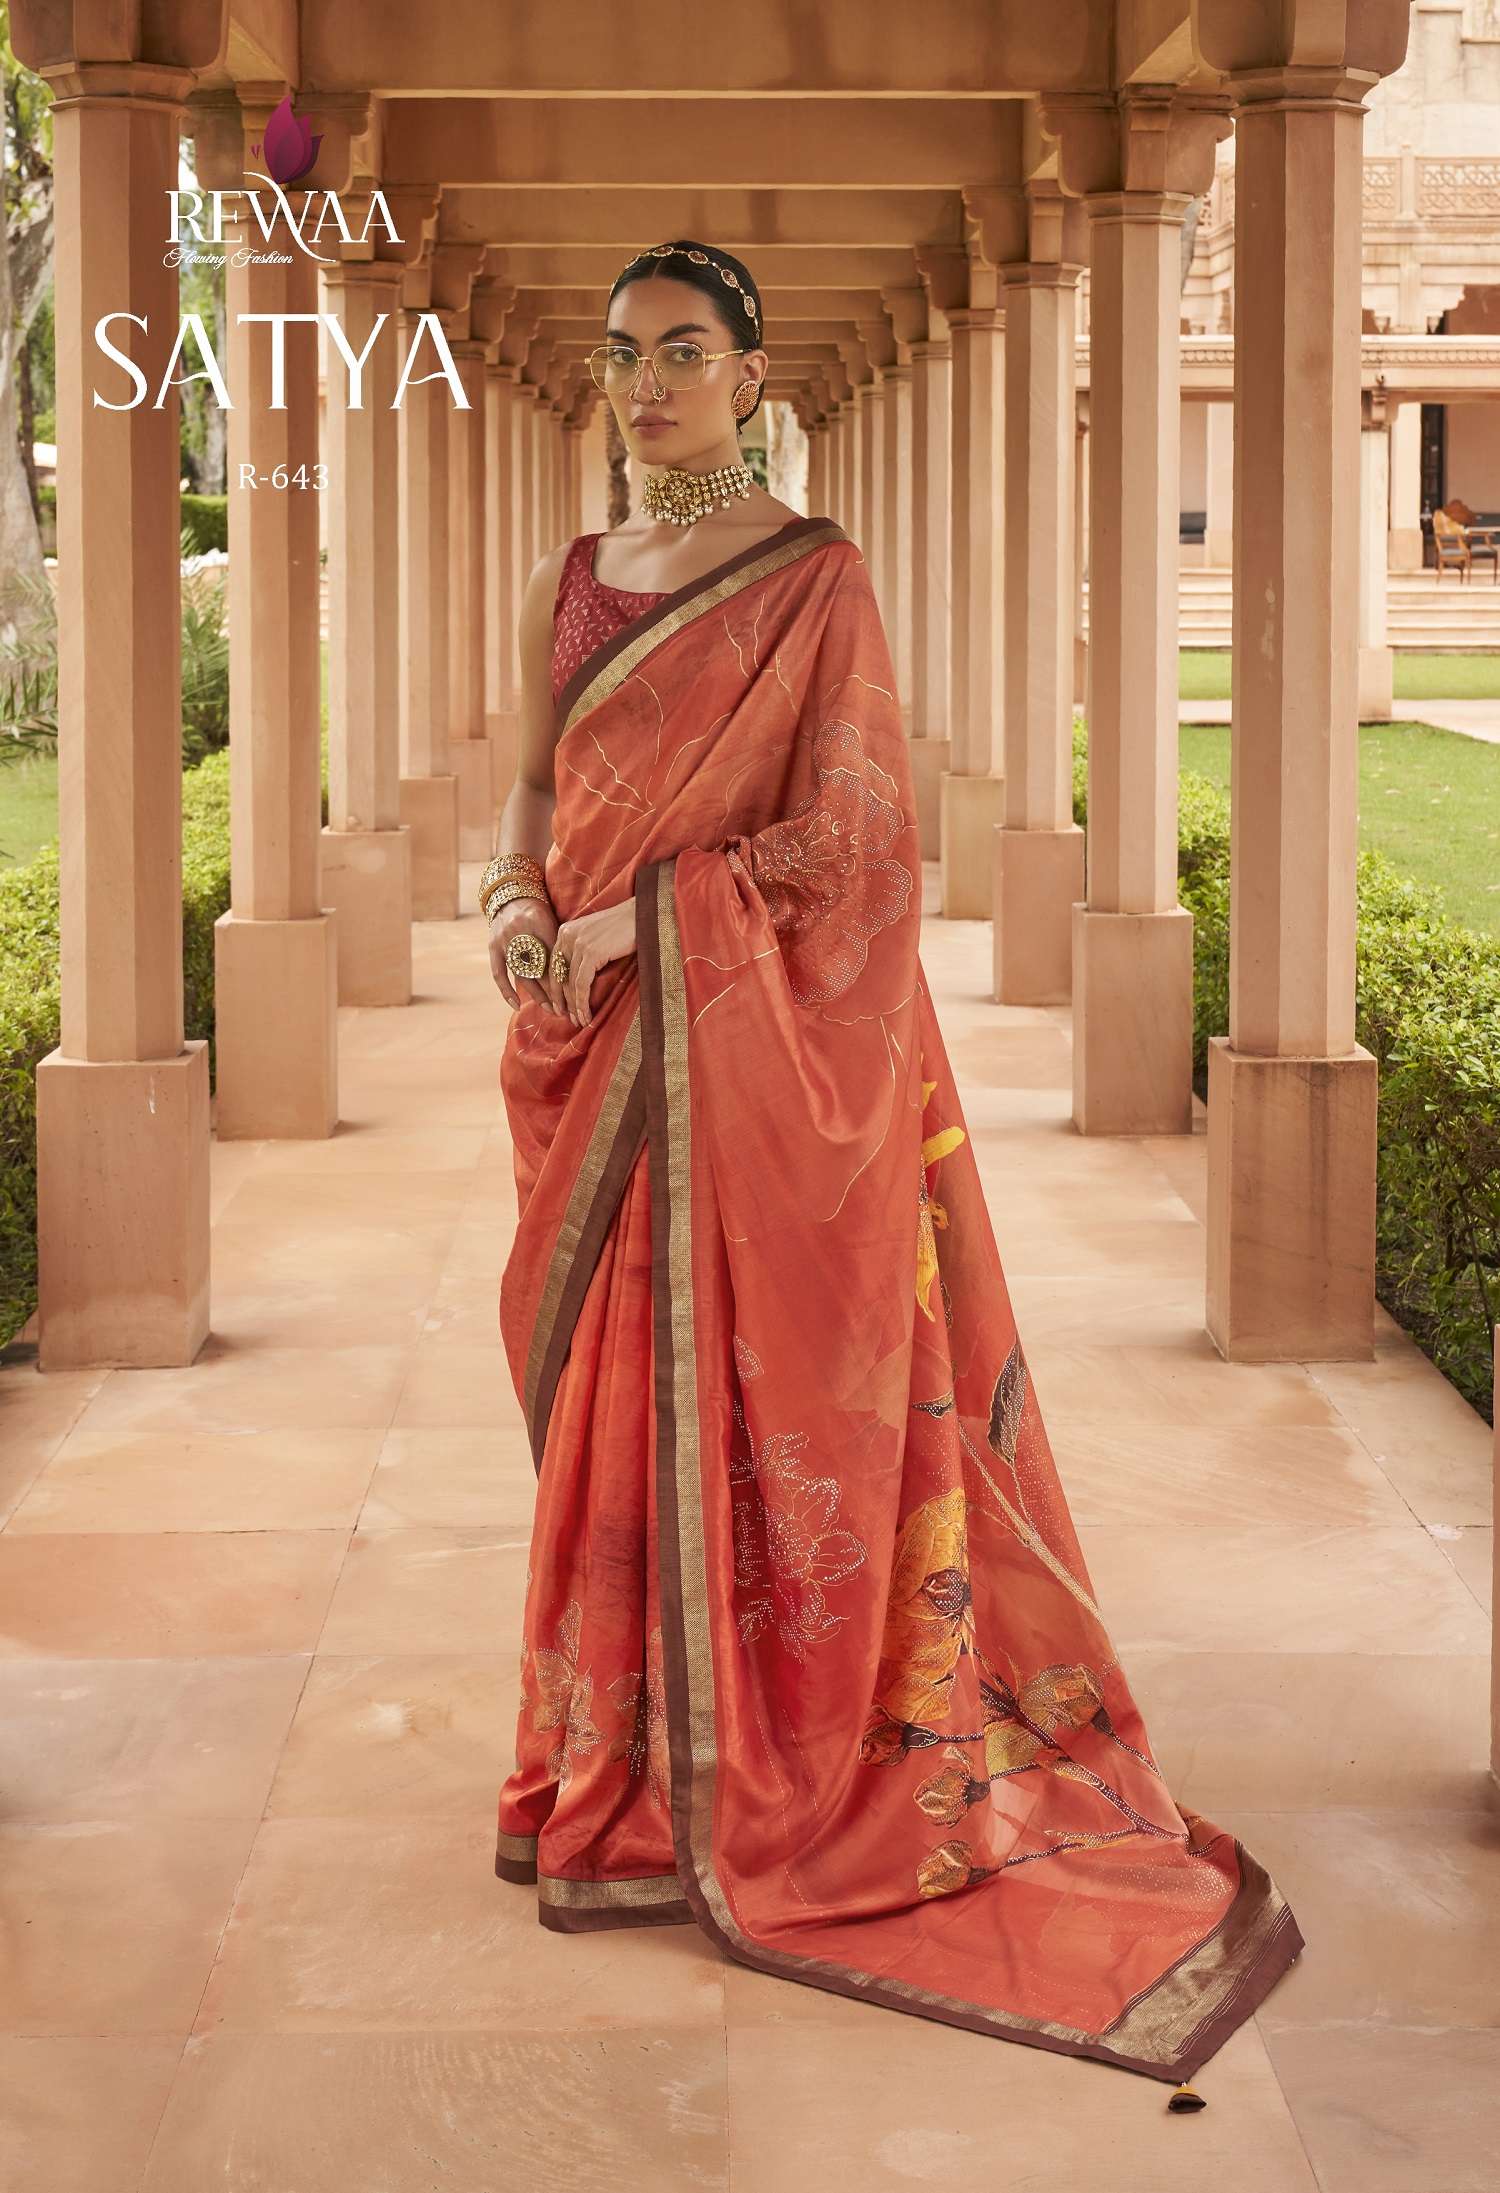 Rewaa Satya Banarasi Silk Designer Saree Wholesale catalog